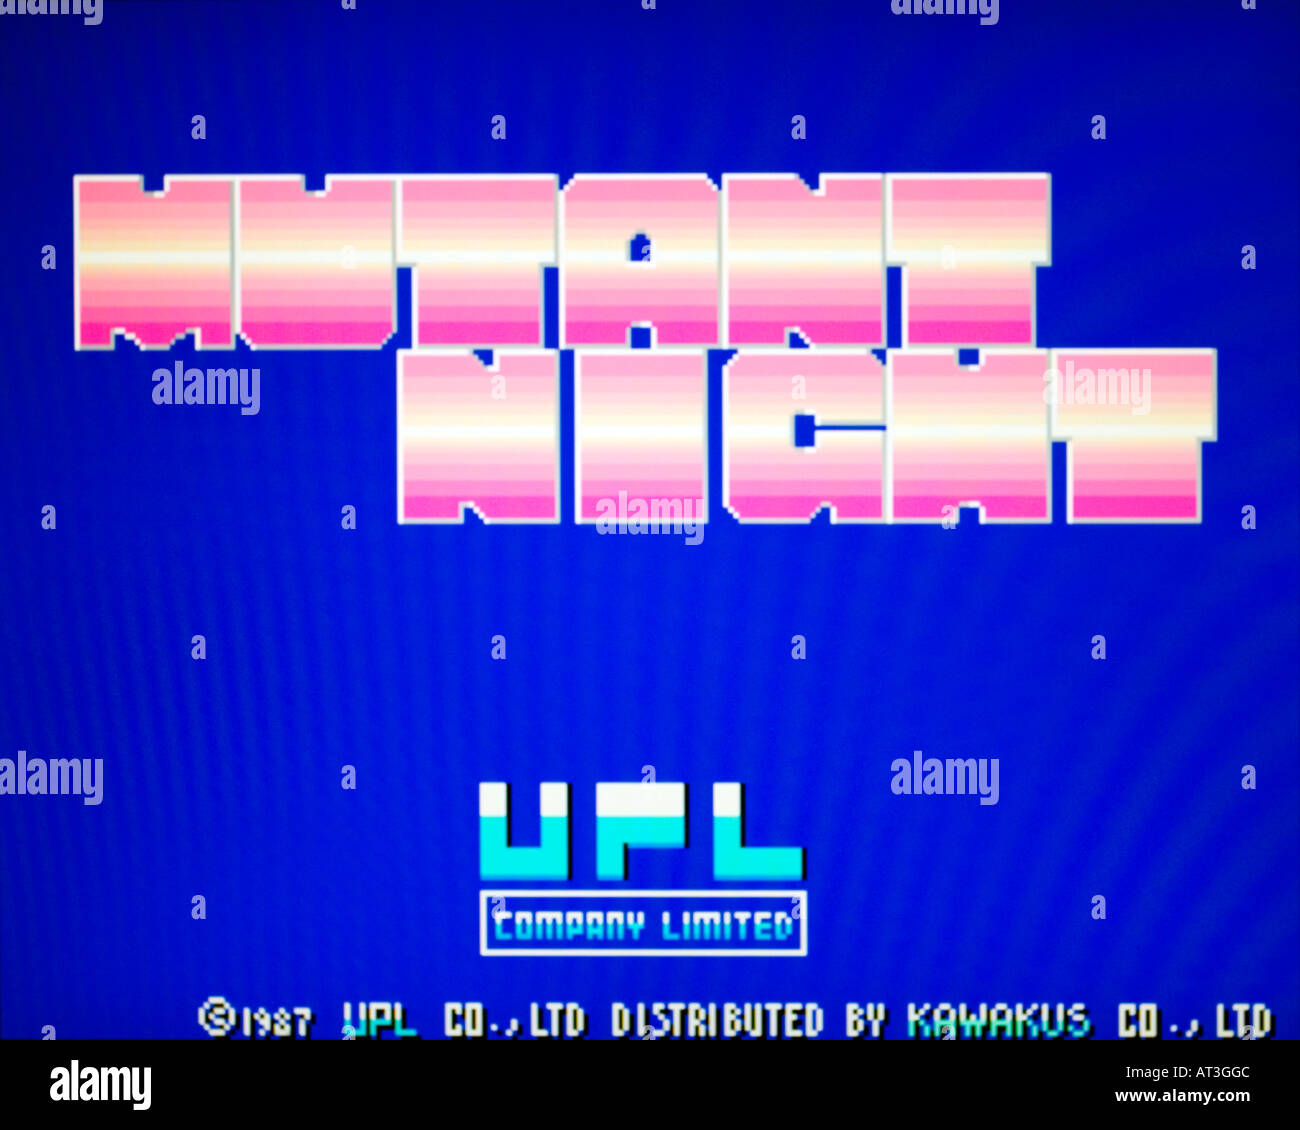 Mutant Night UPL Co Ltd Kawakus Co Ltd 1987 vintage arcade videogame screenshot - Editorial Use Only Stock Photo